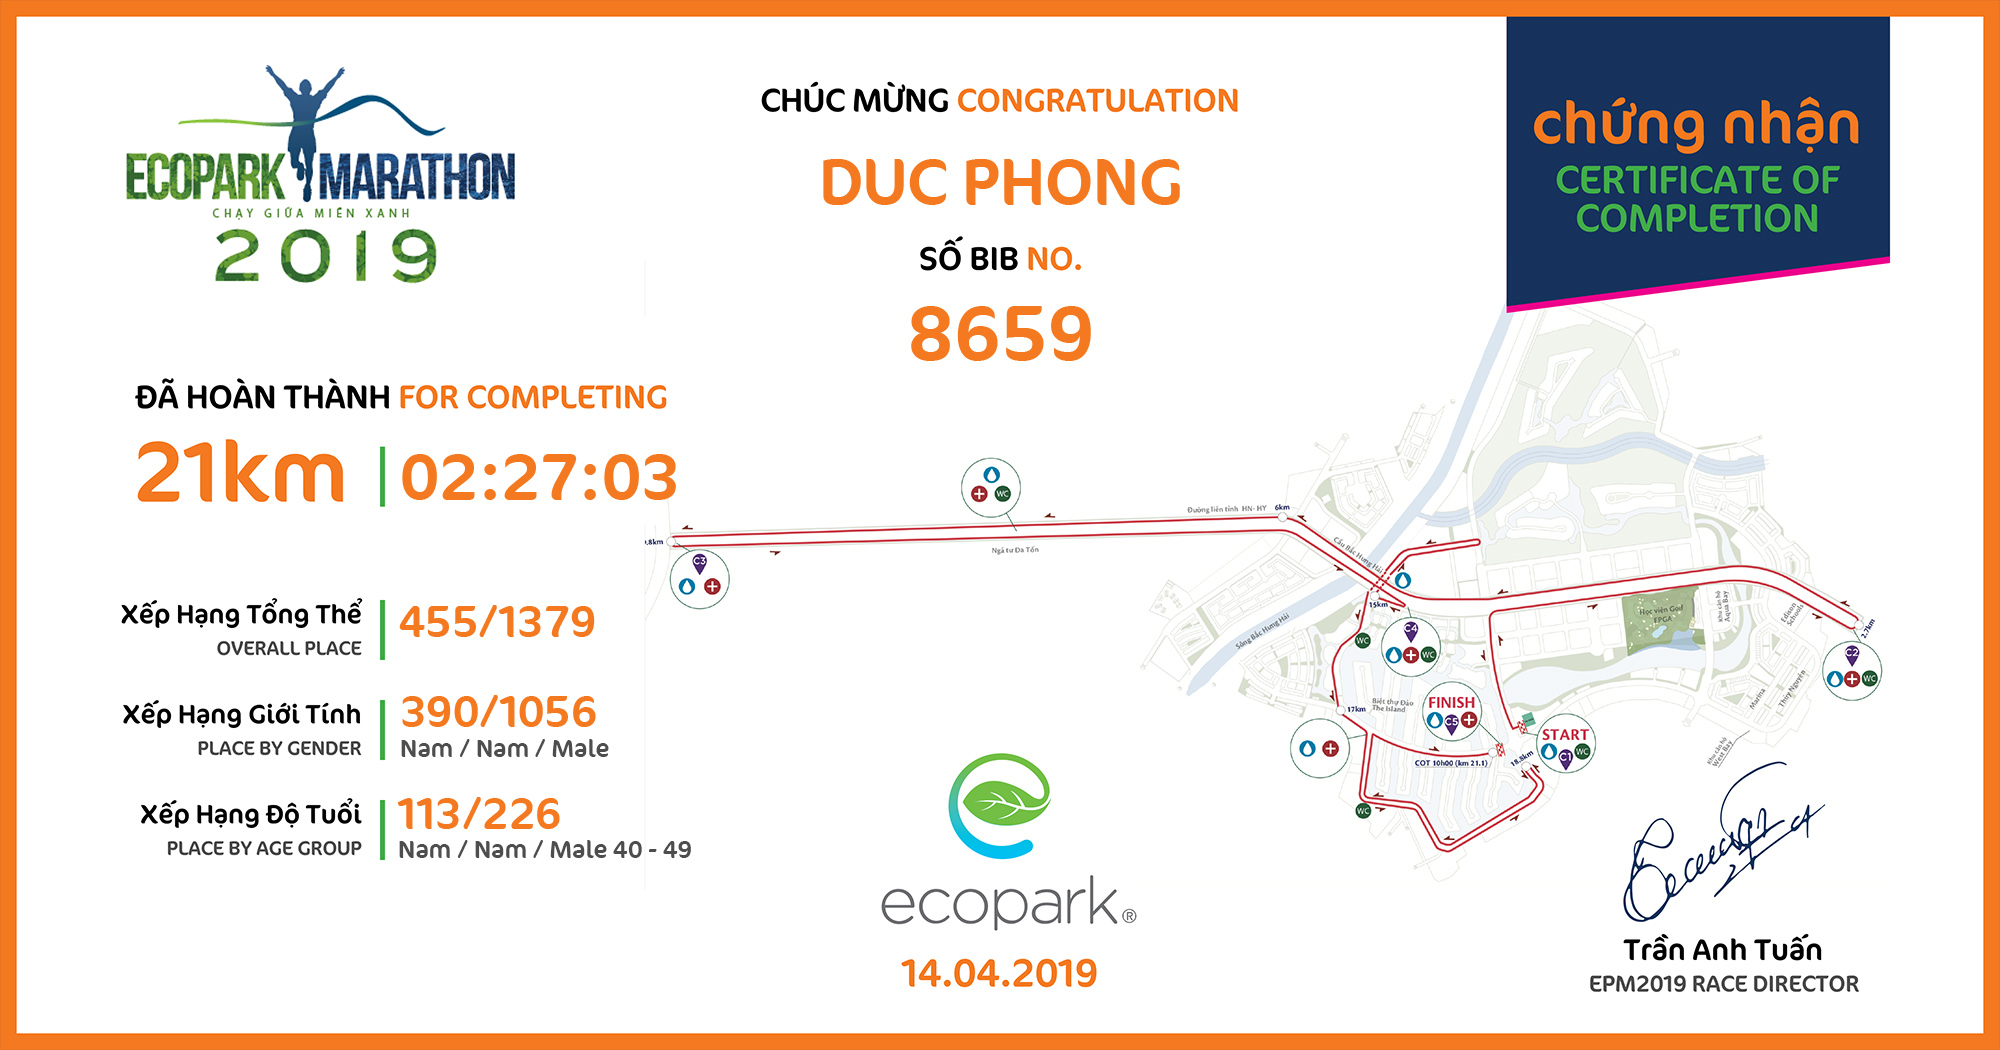 8659 - Duc Phong